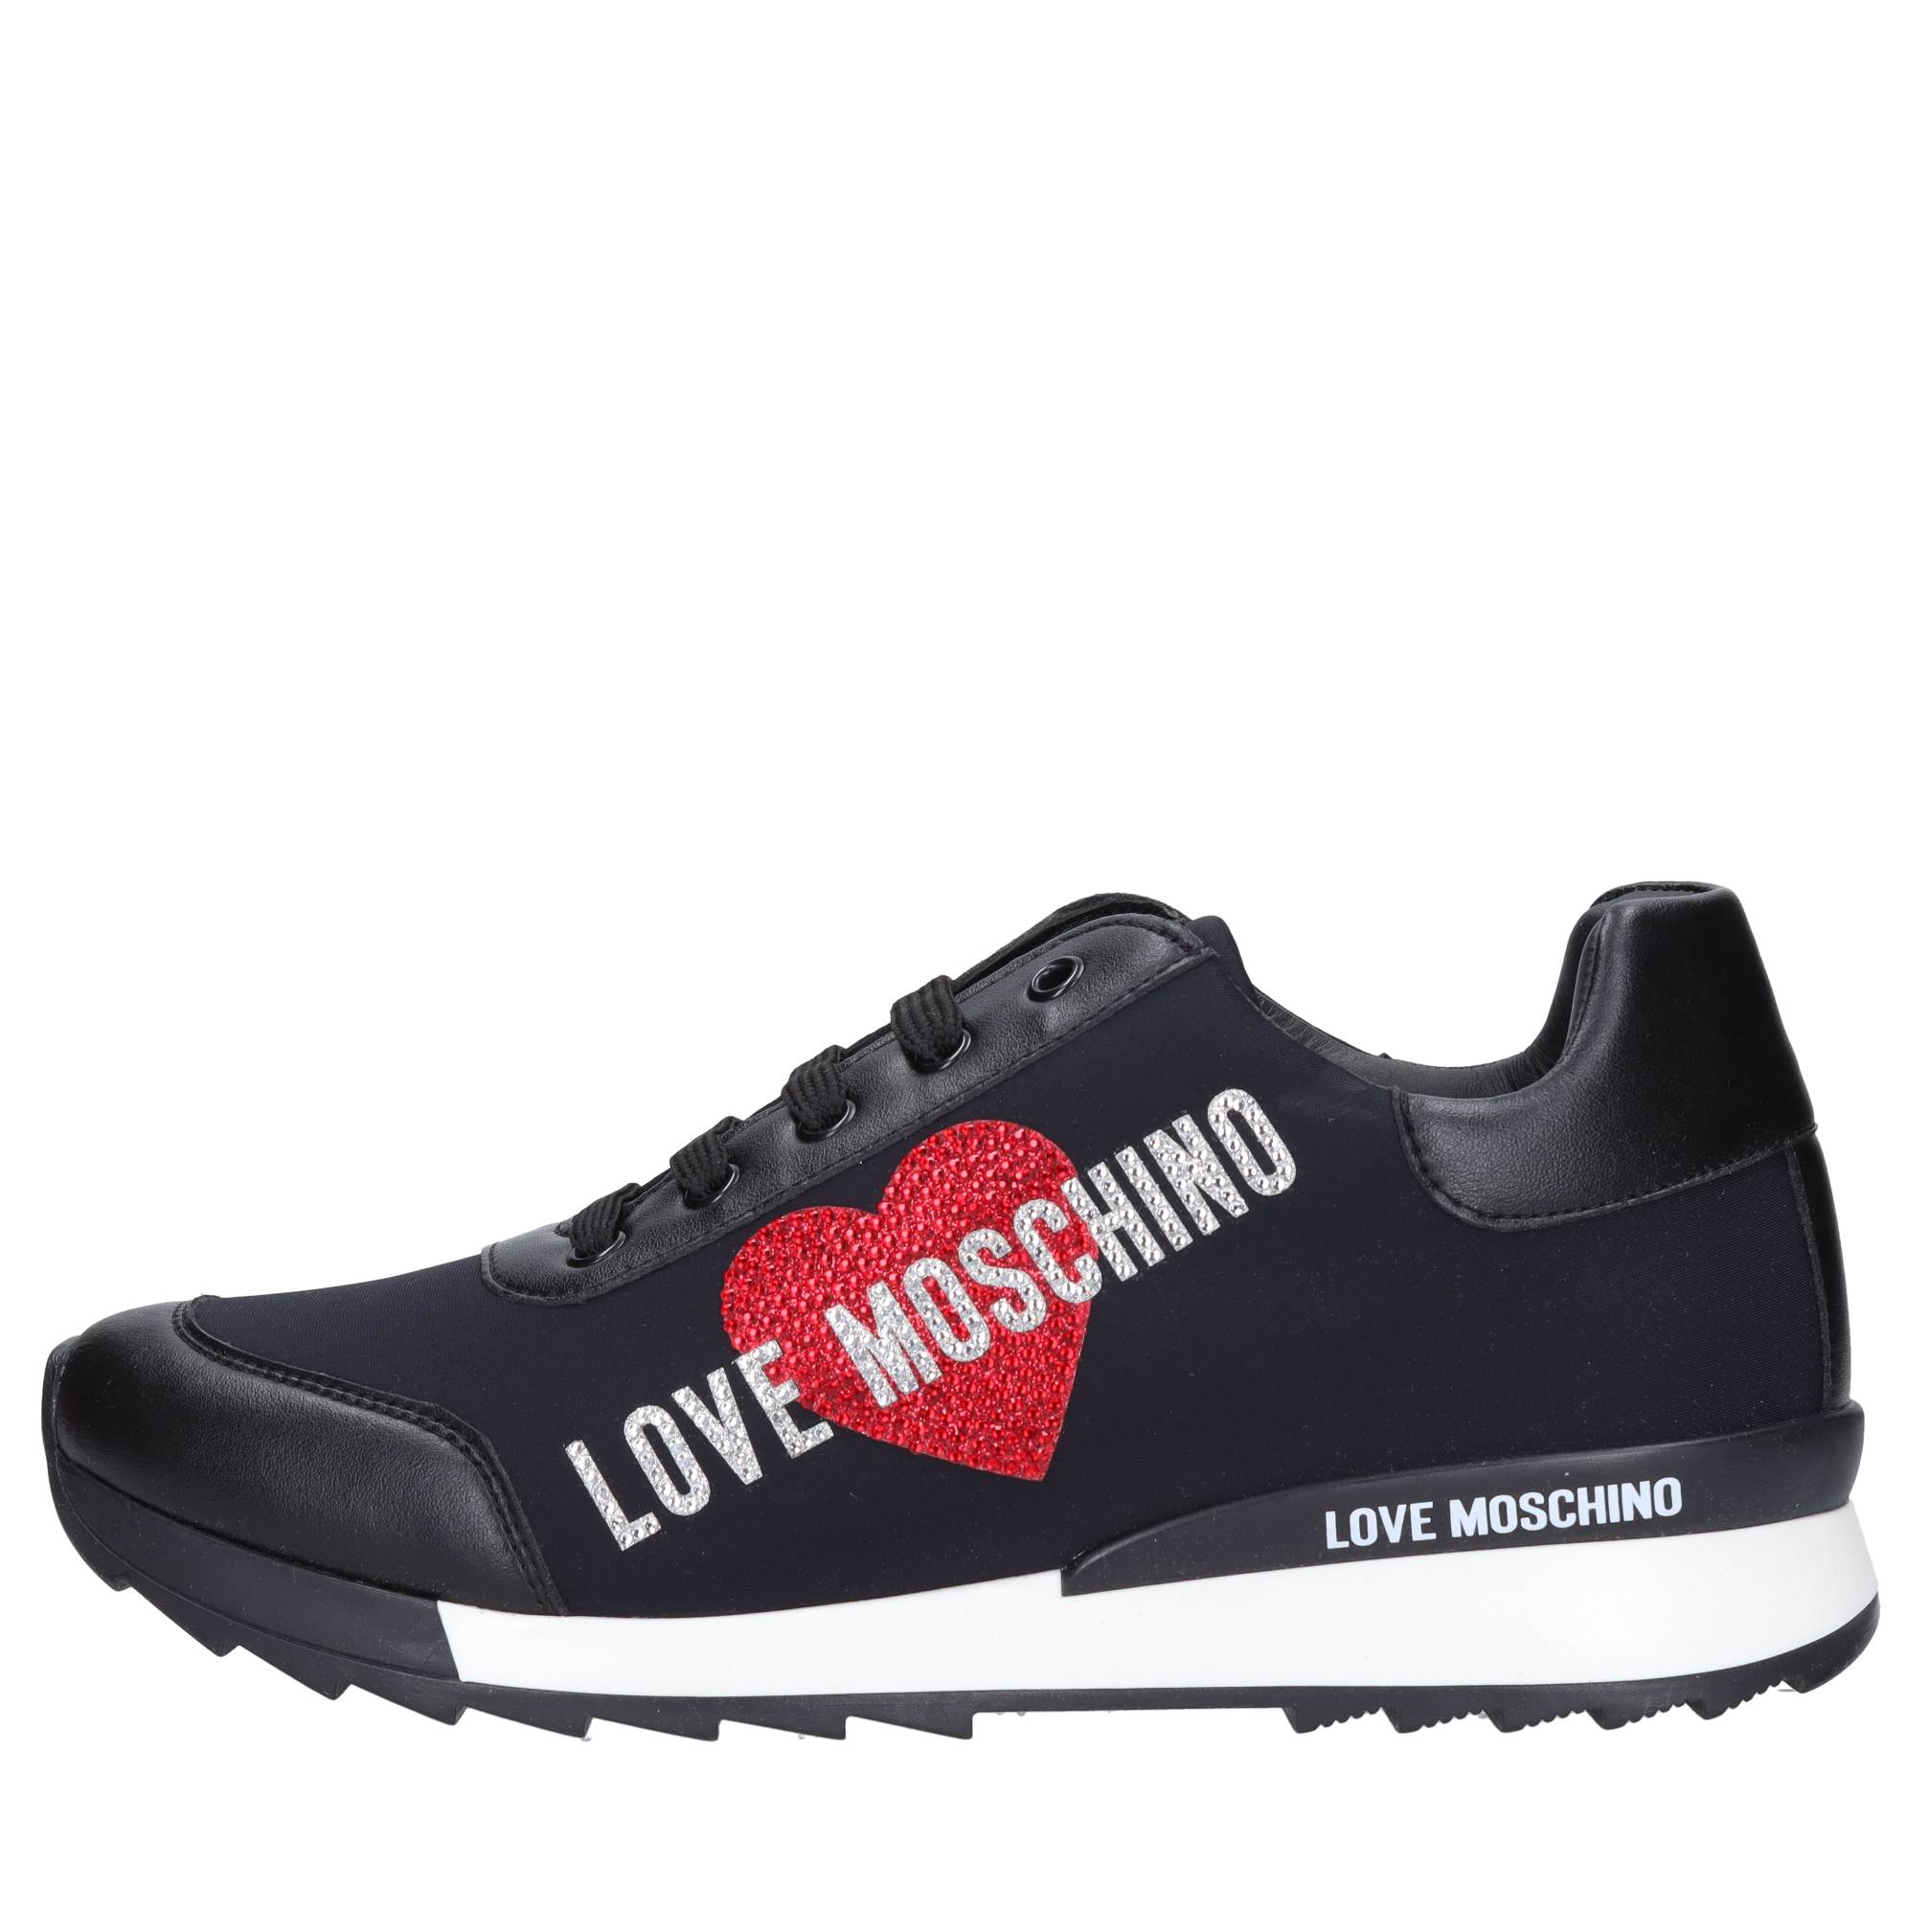 Sneakers in tessuto ed ecopelle - LOVE MOSCHINO - Ginevra calzature